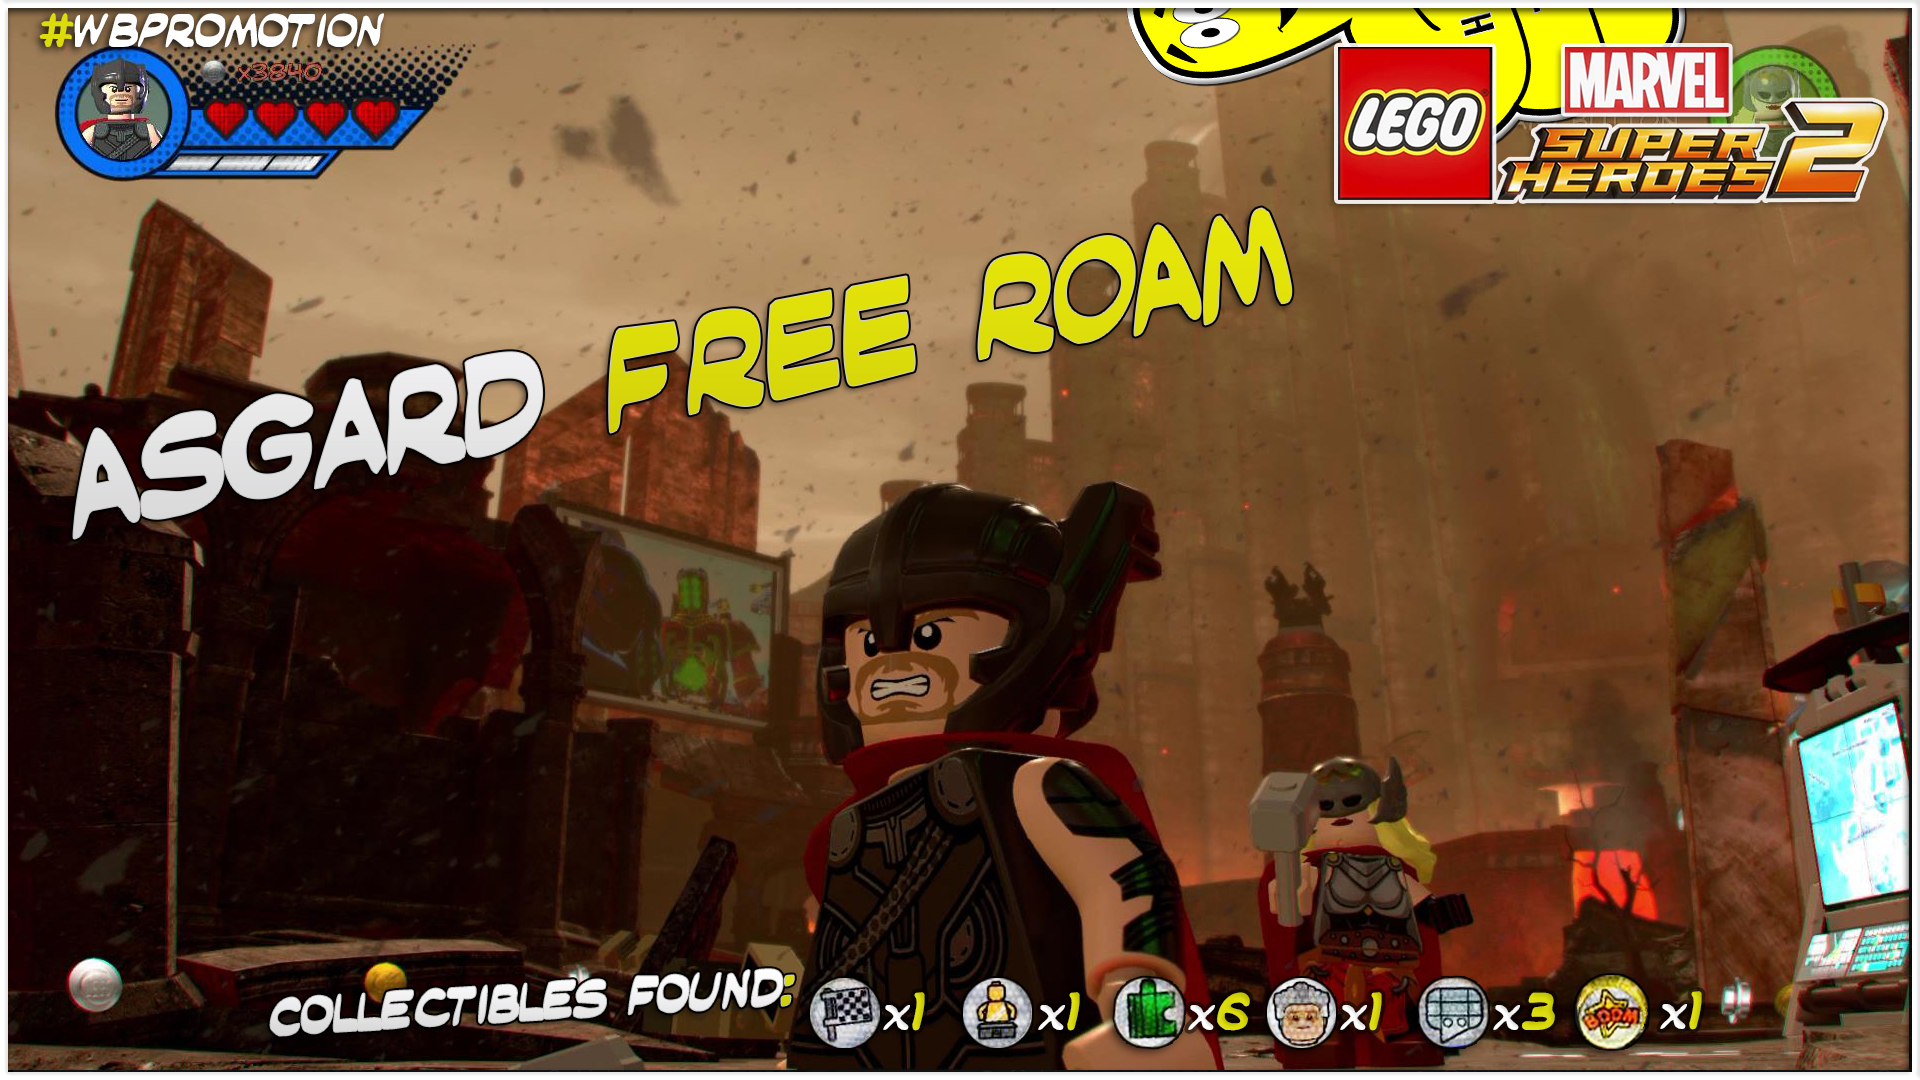 Lego Marvel Superheroes 2: Asgard FREE ROAM (All Collectibles) – HTG